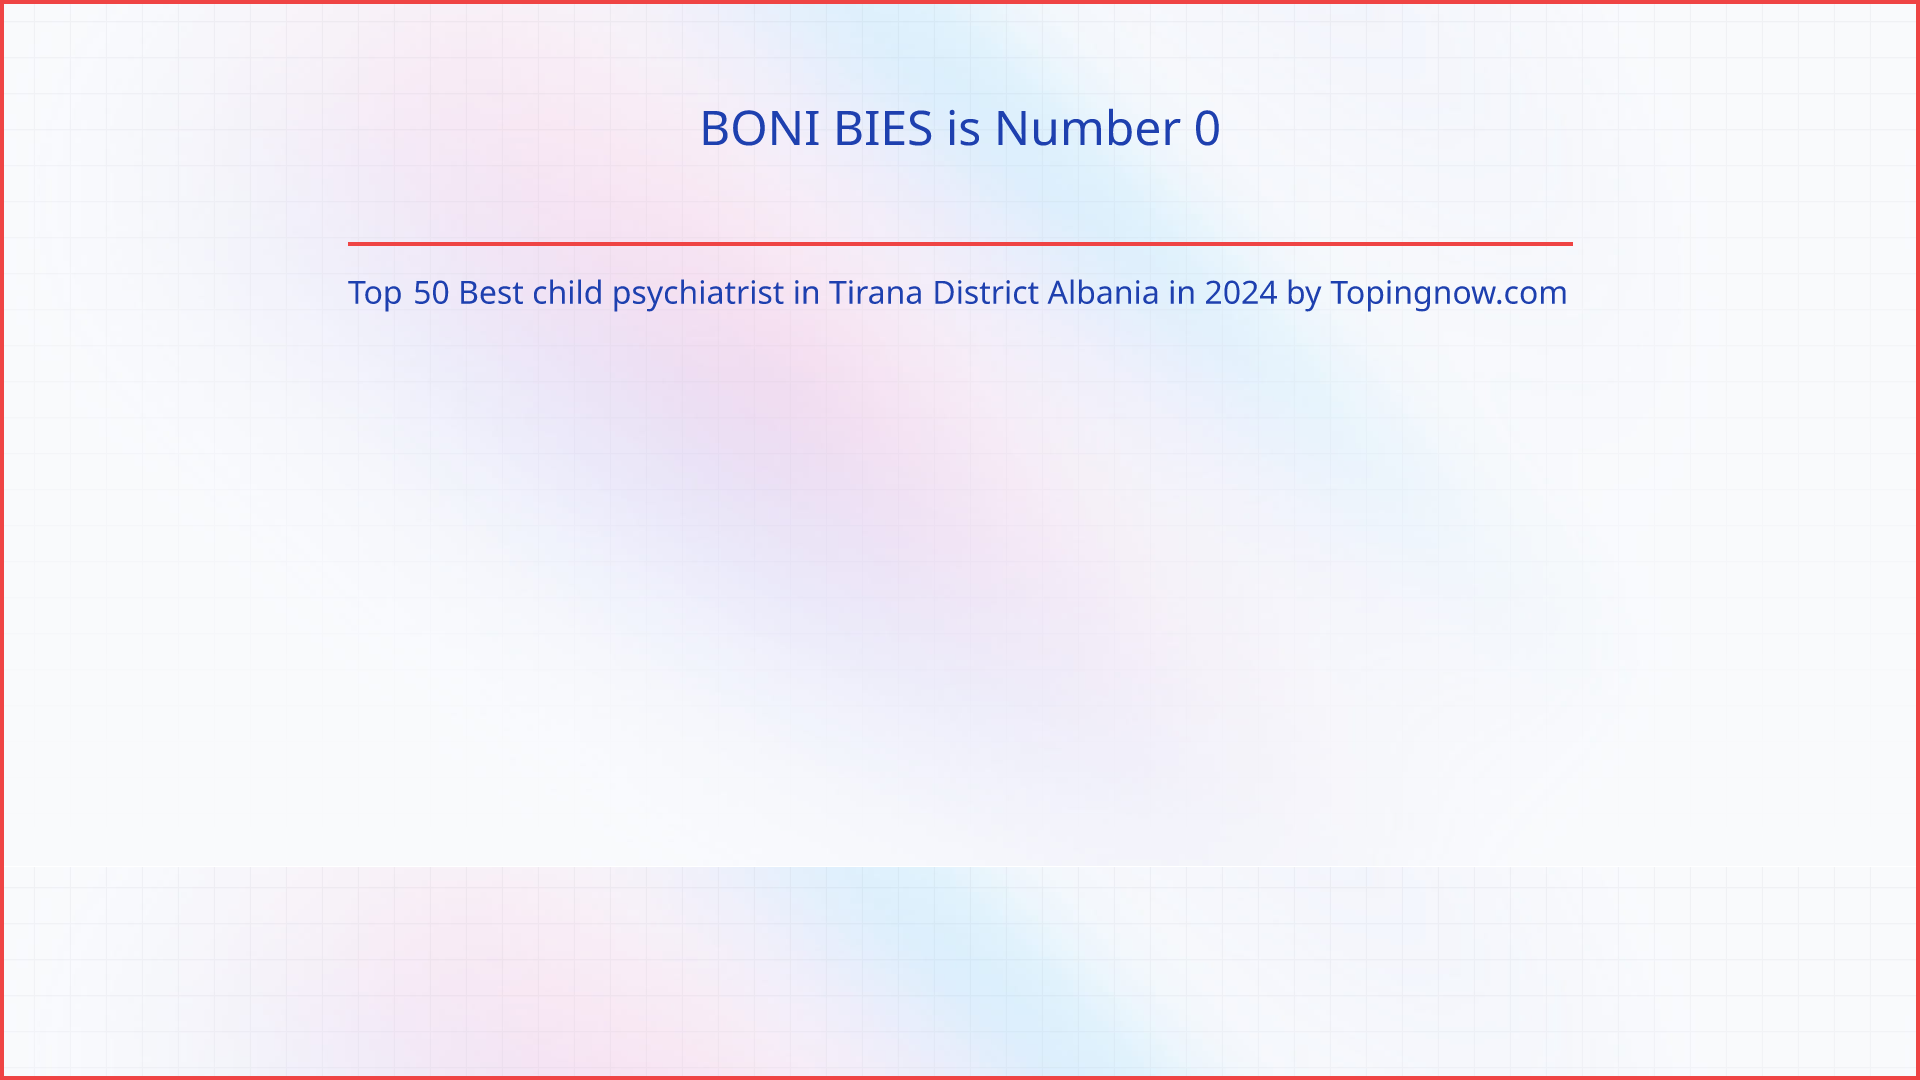 BONI BIES: Top 50 Best child psychiatrist in Tirana District Albania in 2024